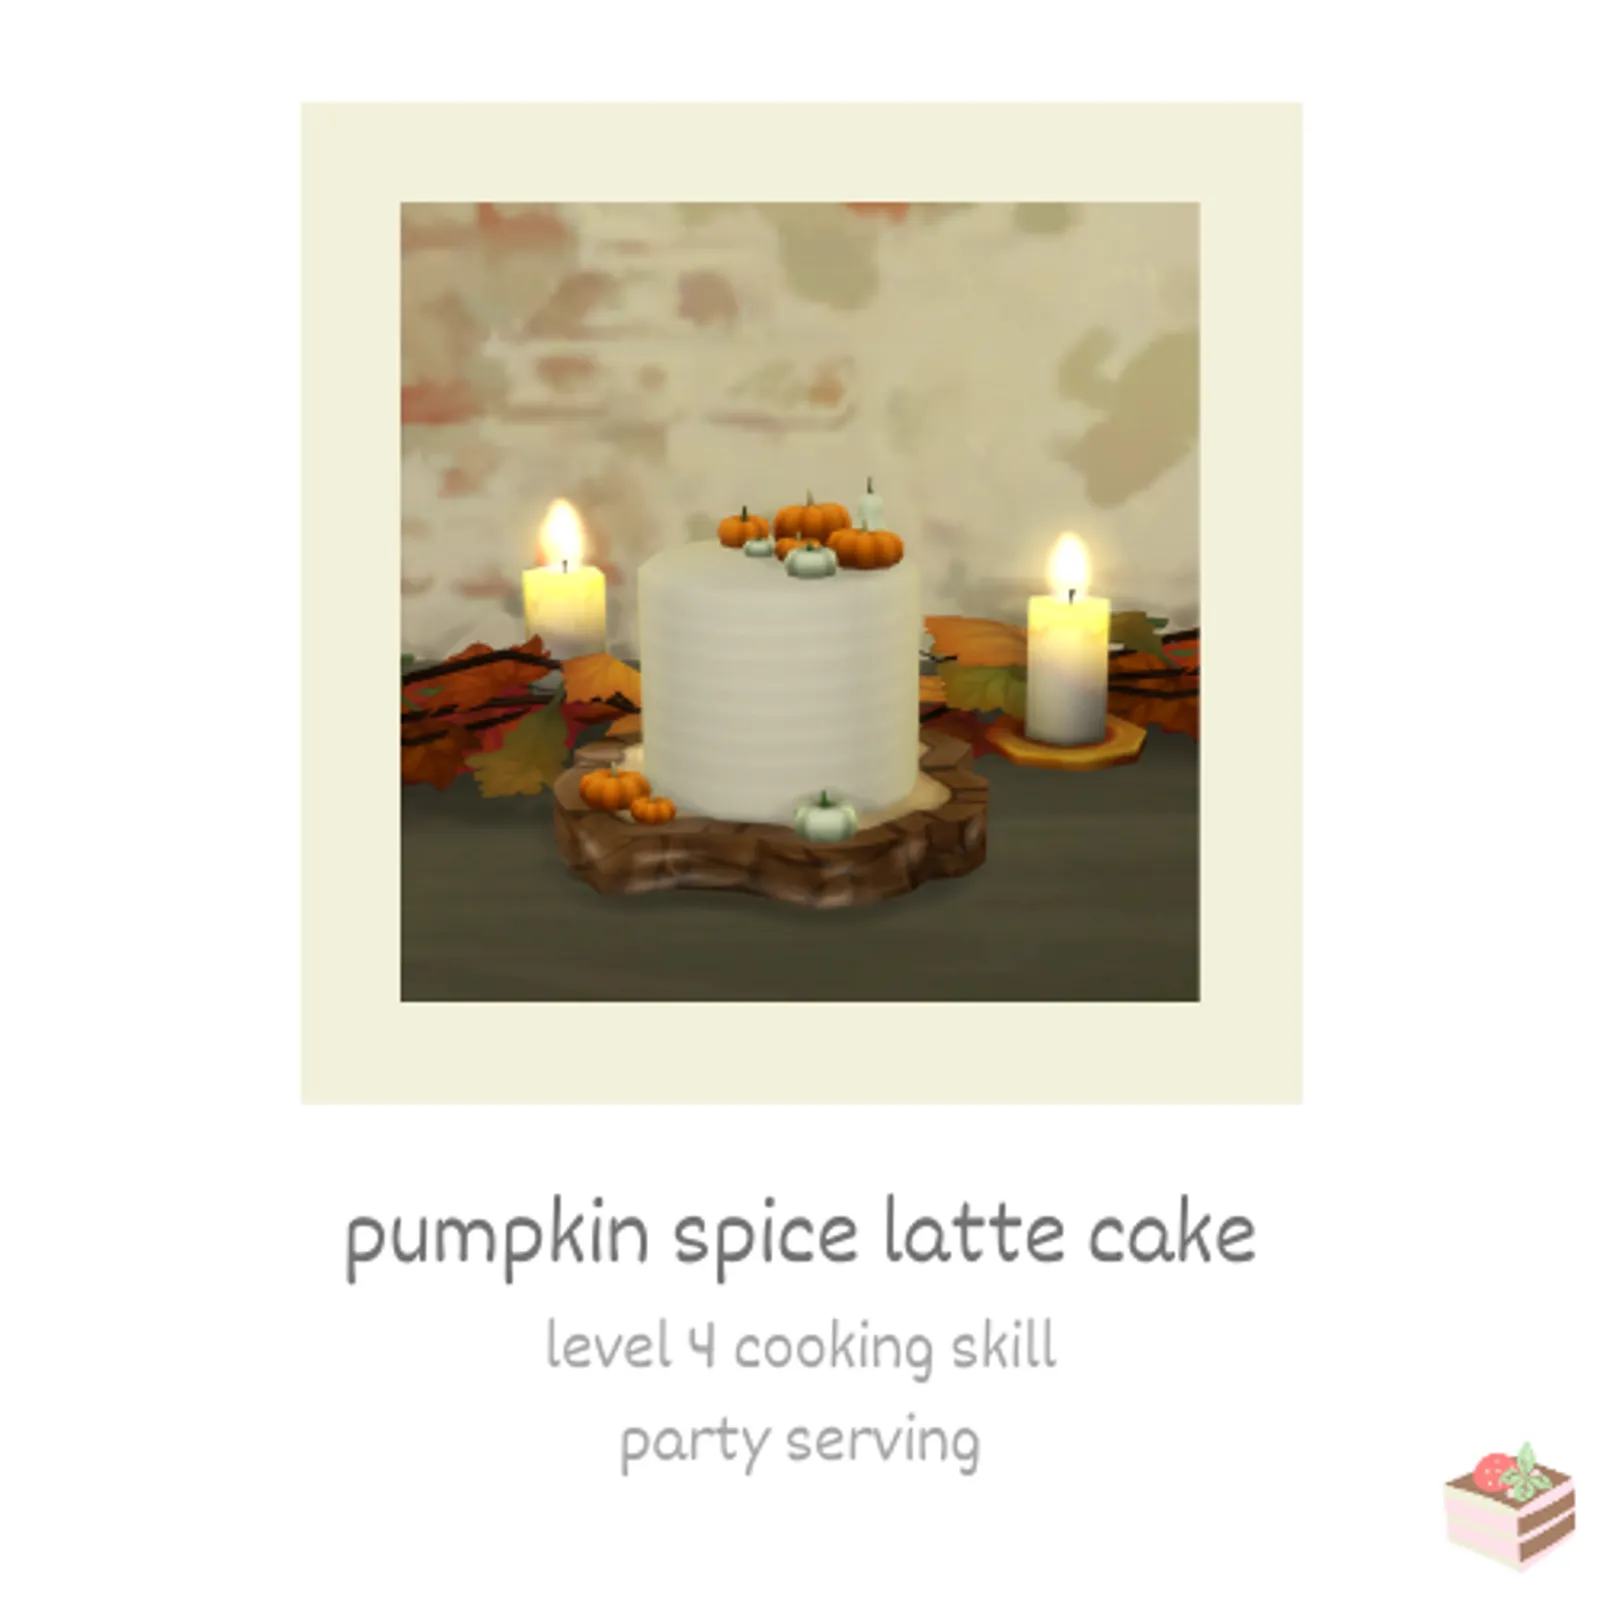 pumpkin spice latte cake